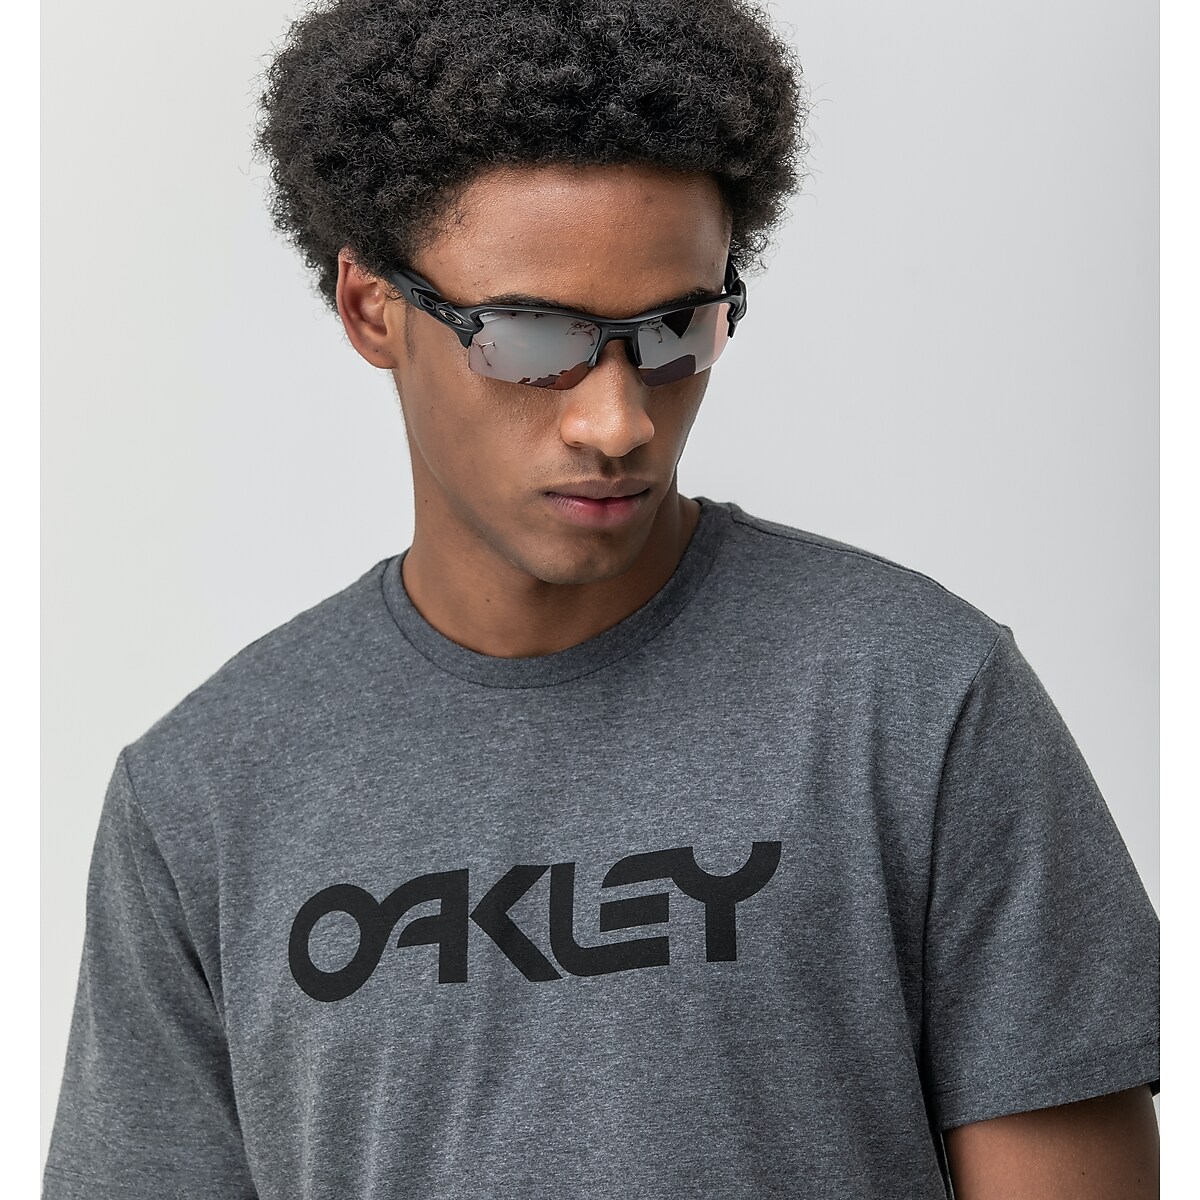 a-static.mlcdn.com.br/470x352/camiseta-oakley-heri